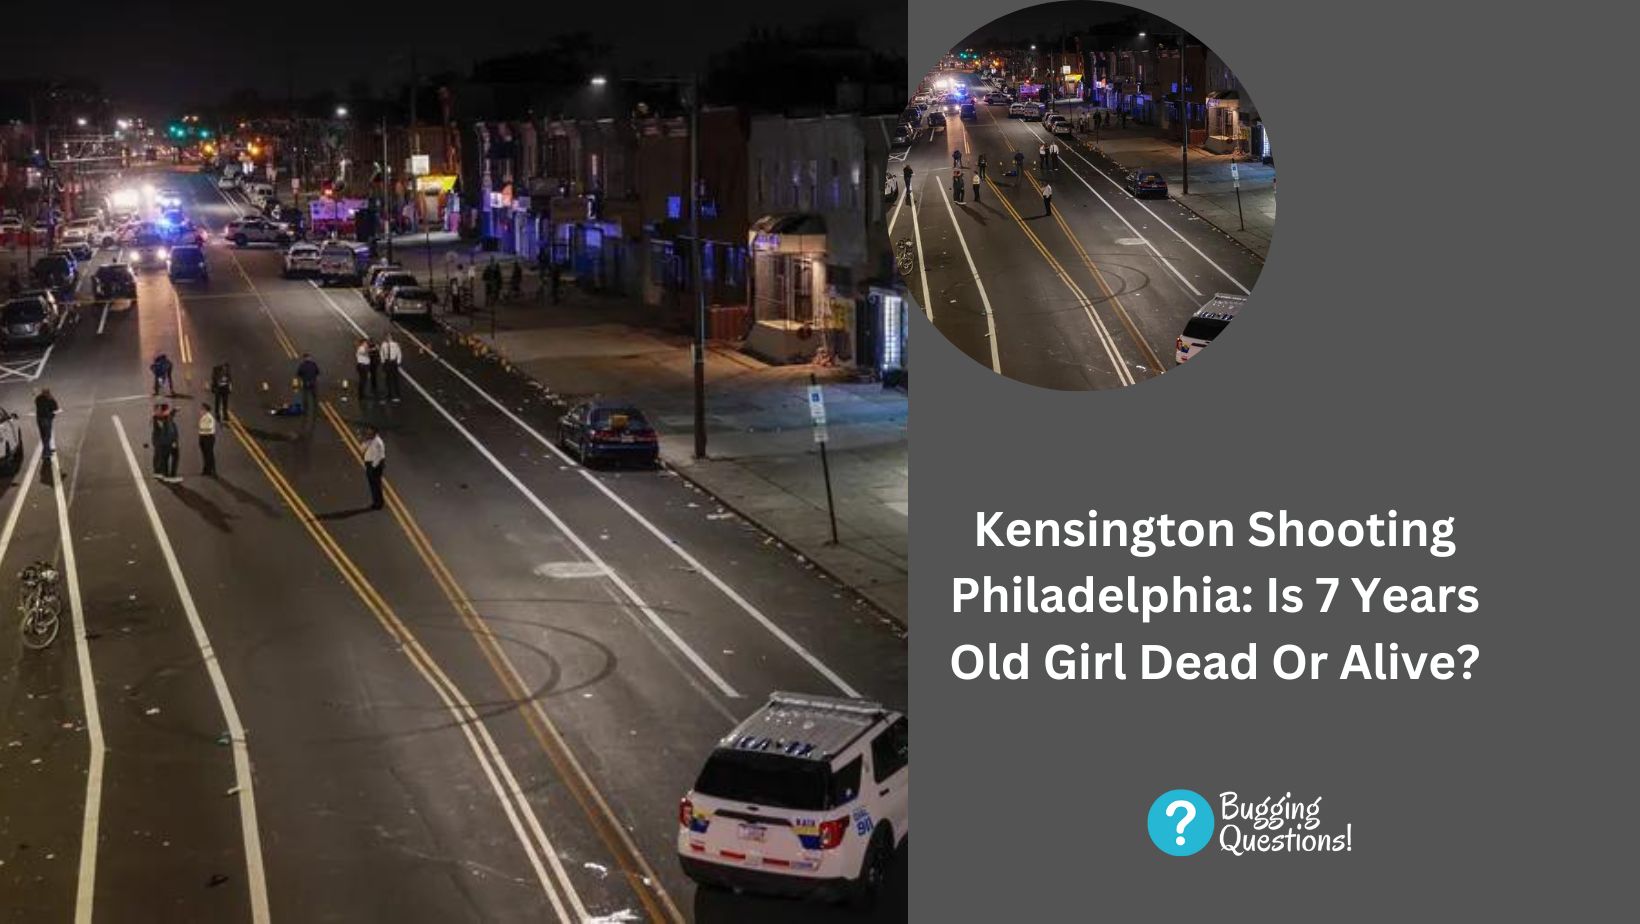 Kensington Shooting Philadelphia: Is 7 Years Old Girl Dead Or Alive?